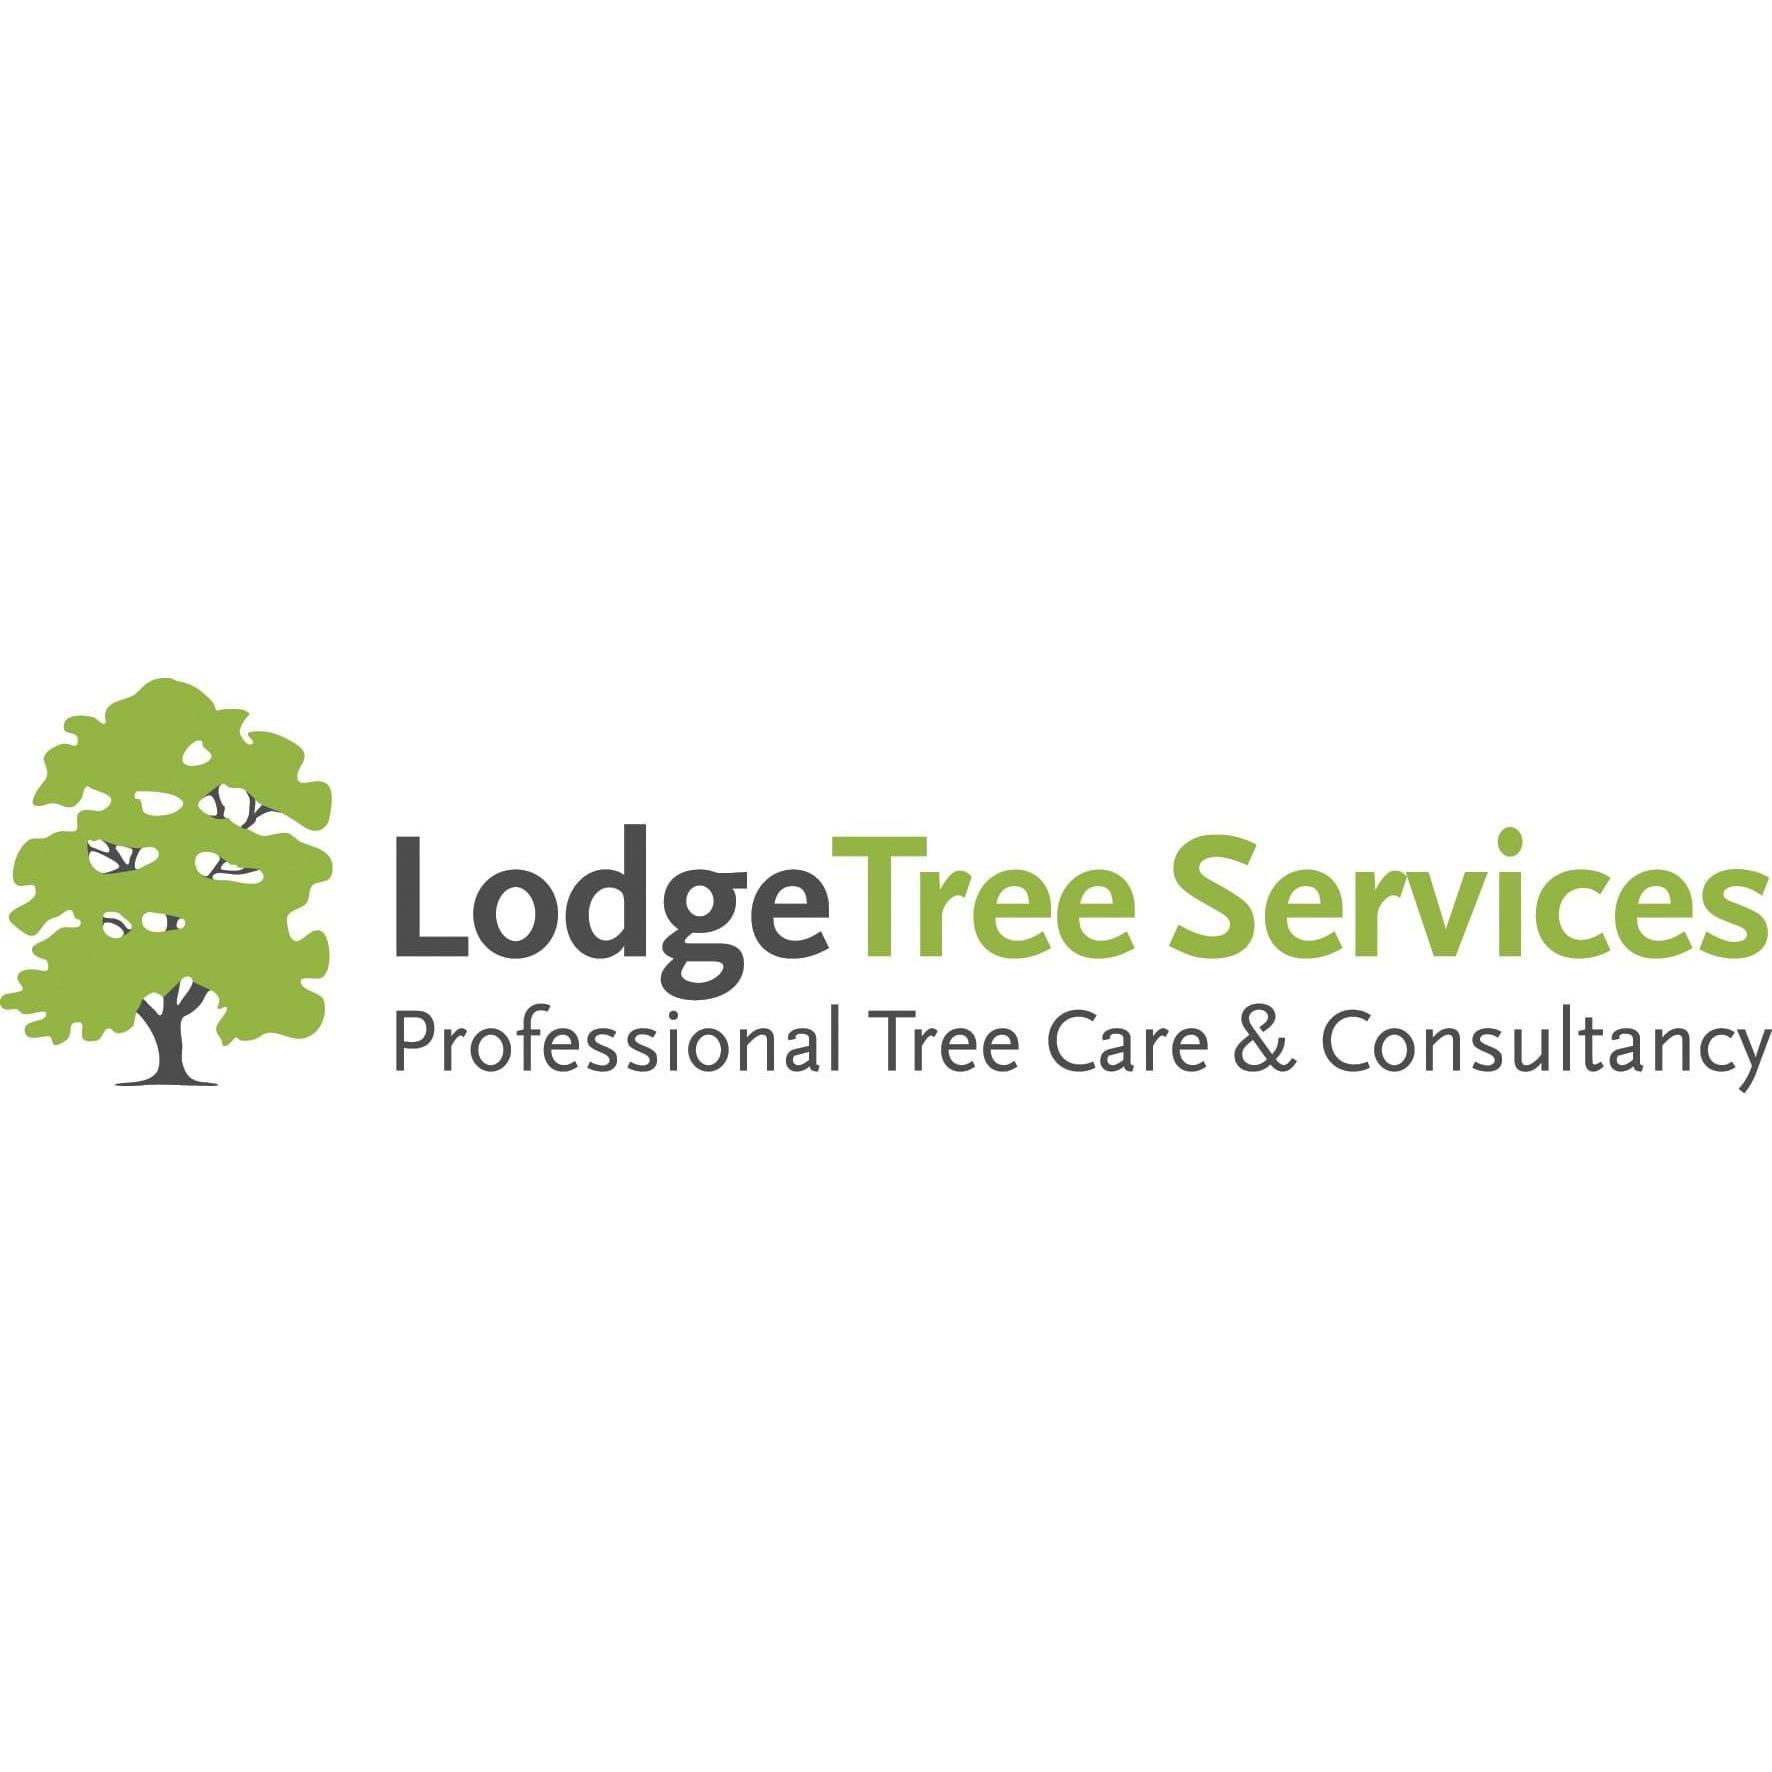 LOGO Lodge Tree Services Gateshead 01914 826392